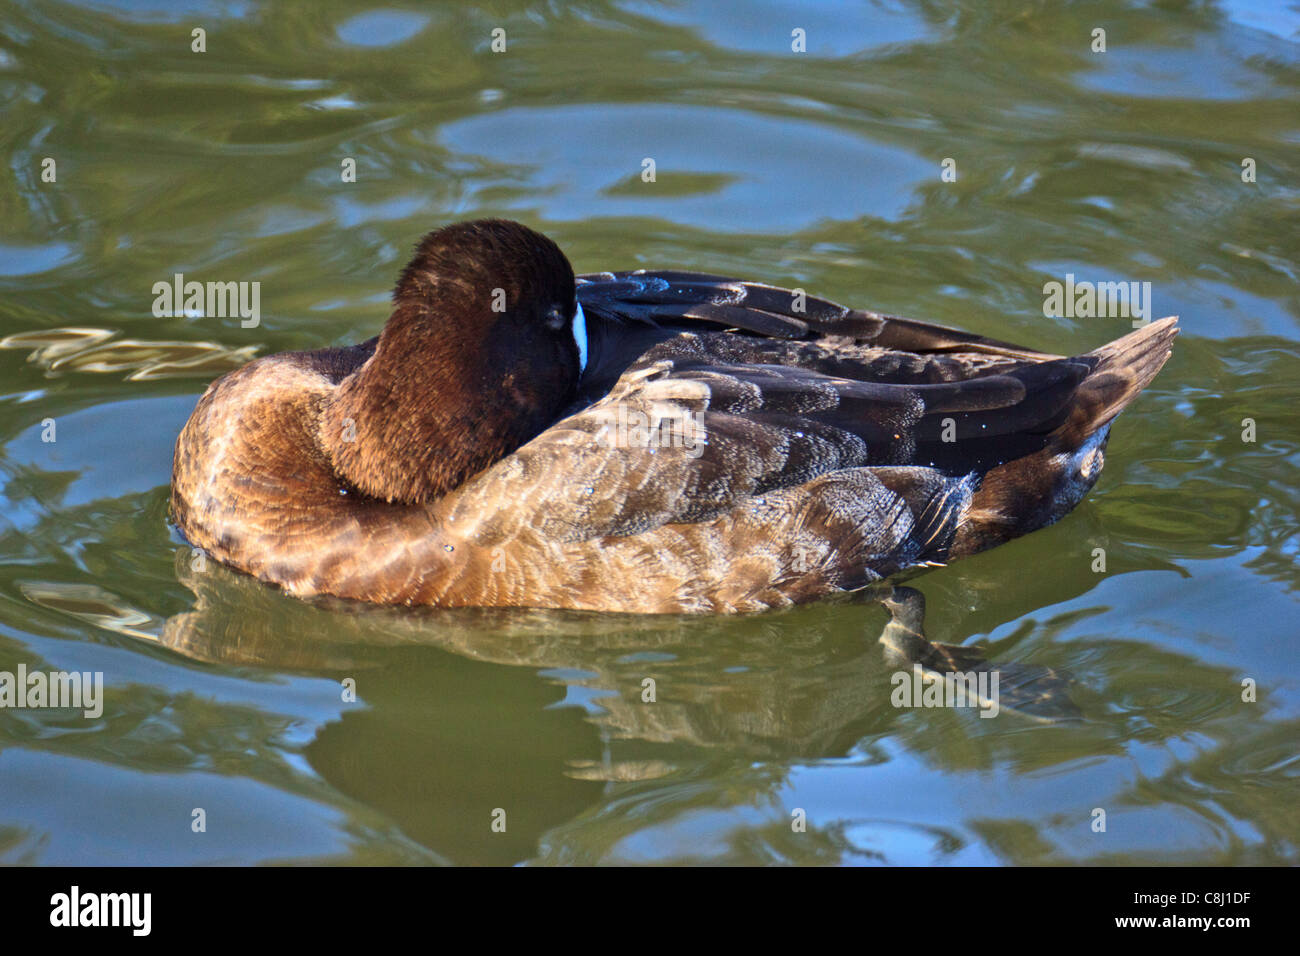 Aythya affinis, Broadbill, ducks, female, Lesser Scaup, Little Bluebill, North American diving duck, Texas, TX, USA, bird, anima Stock Photo